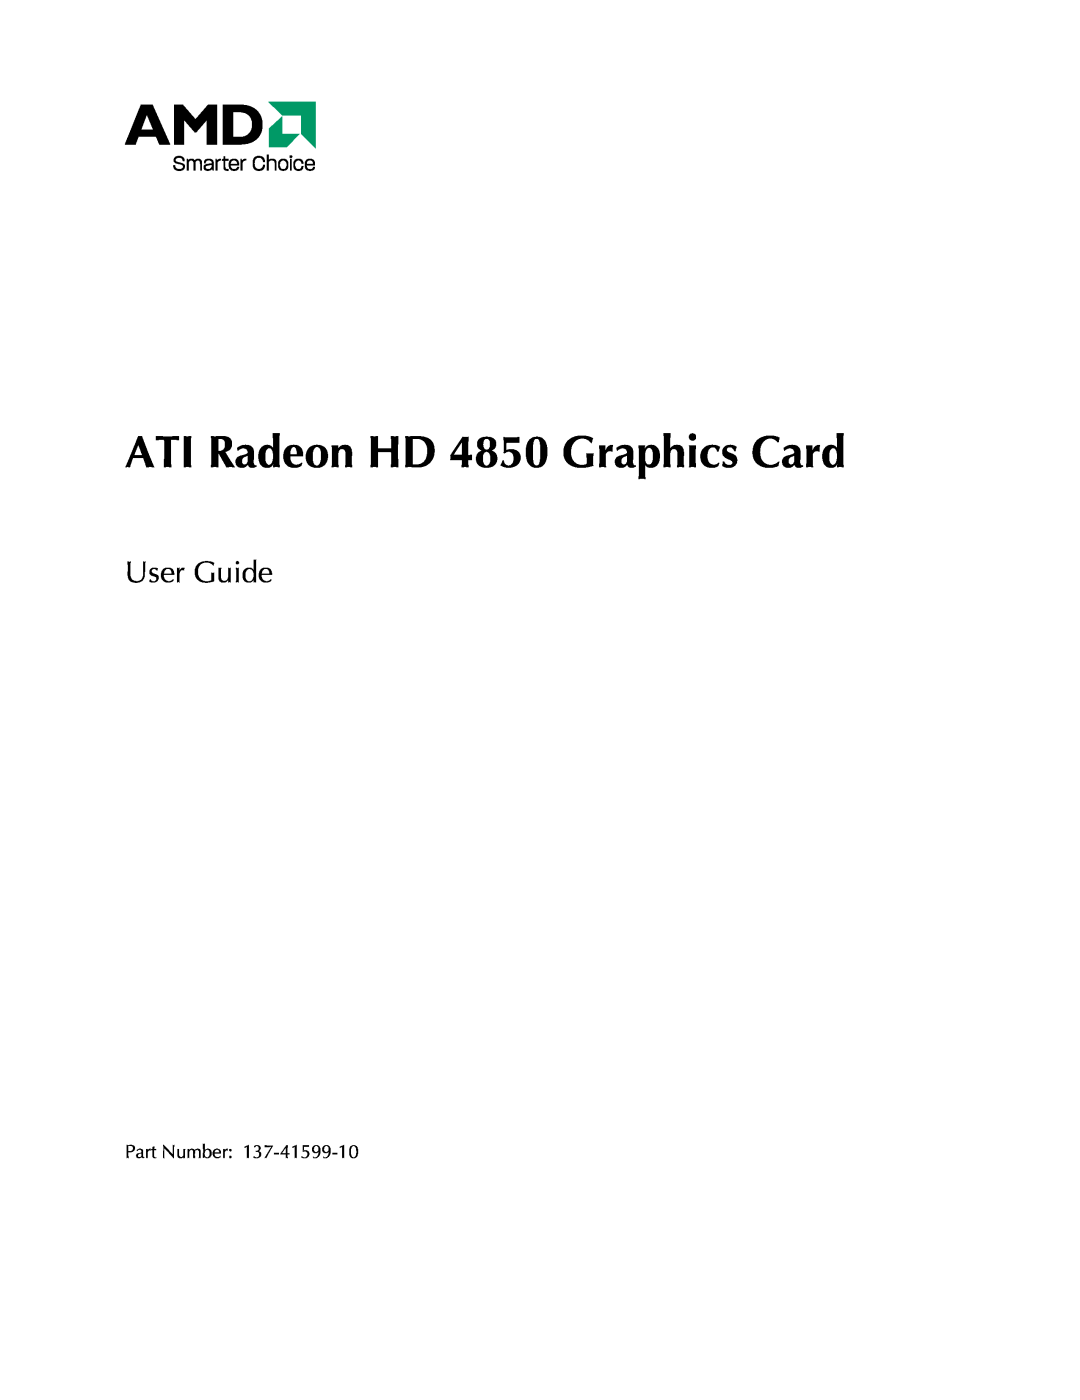 AMD manual Part Number, ATI Radeon HD 4850 Graphics Card, User Guide 